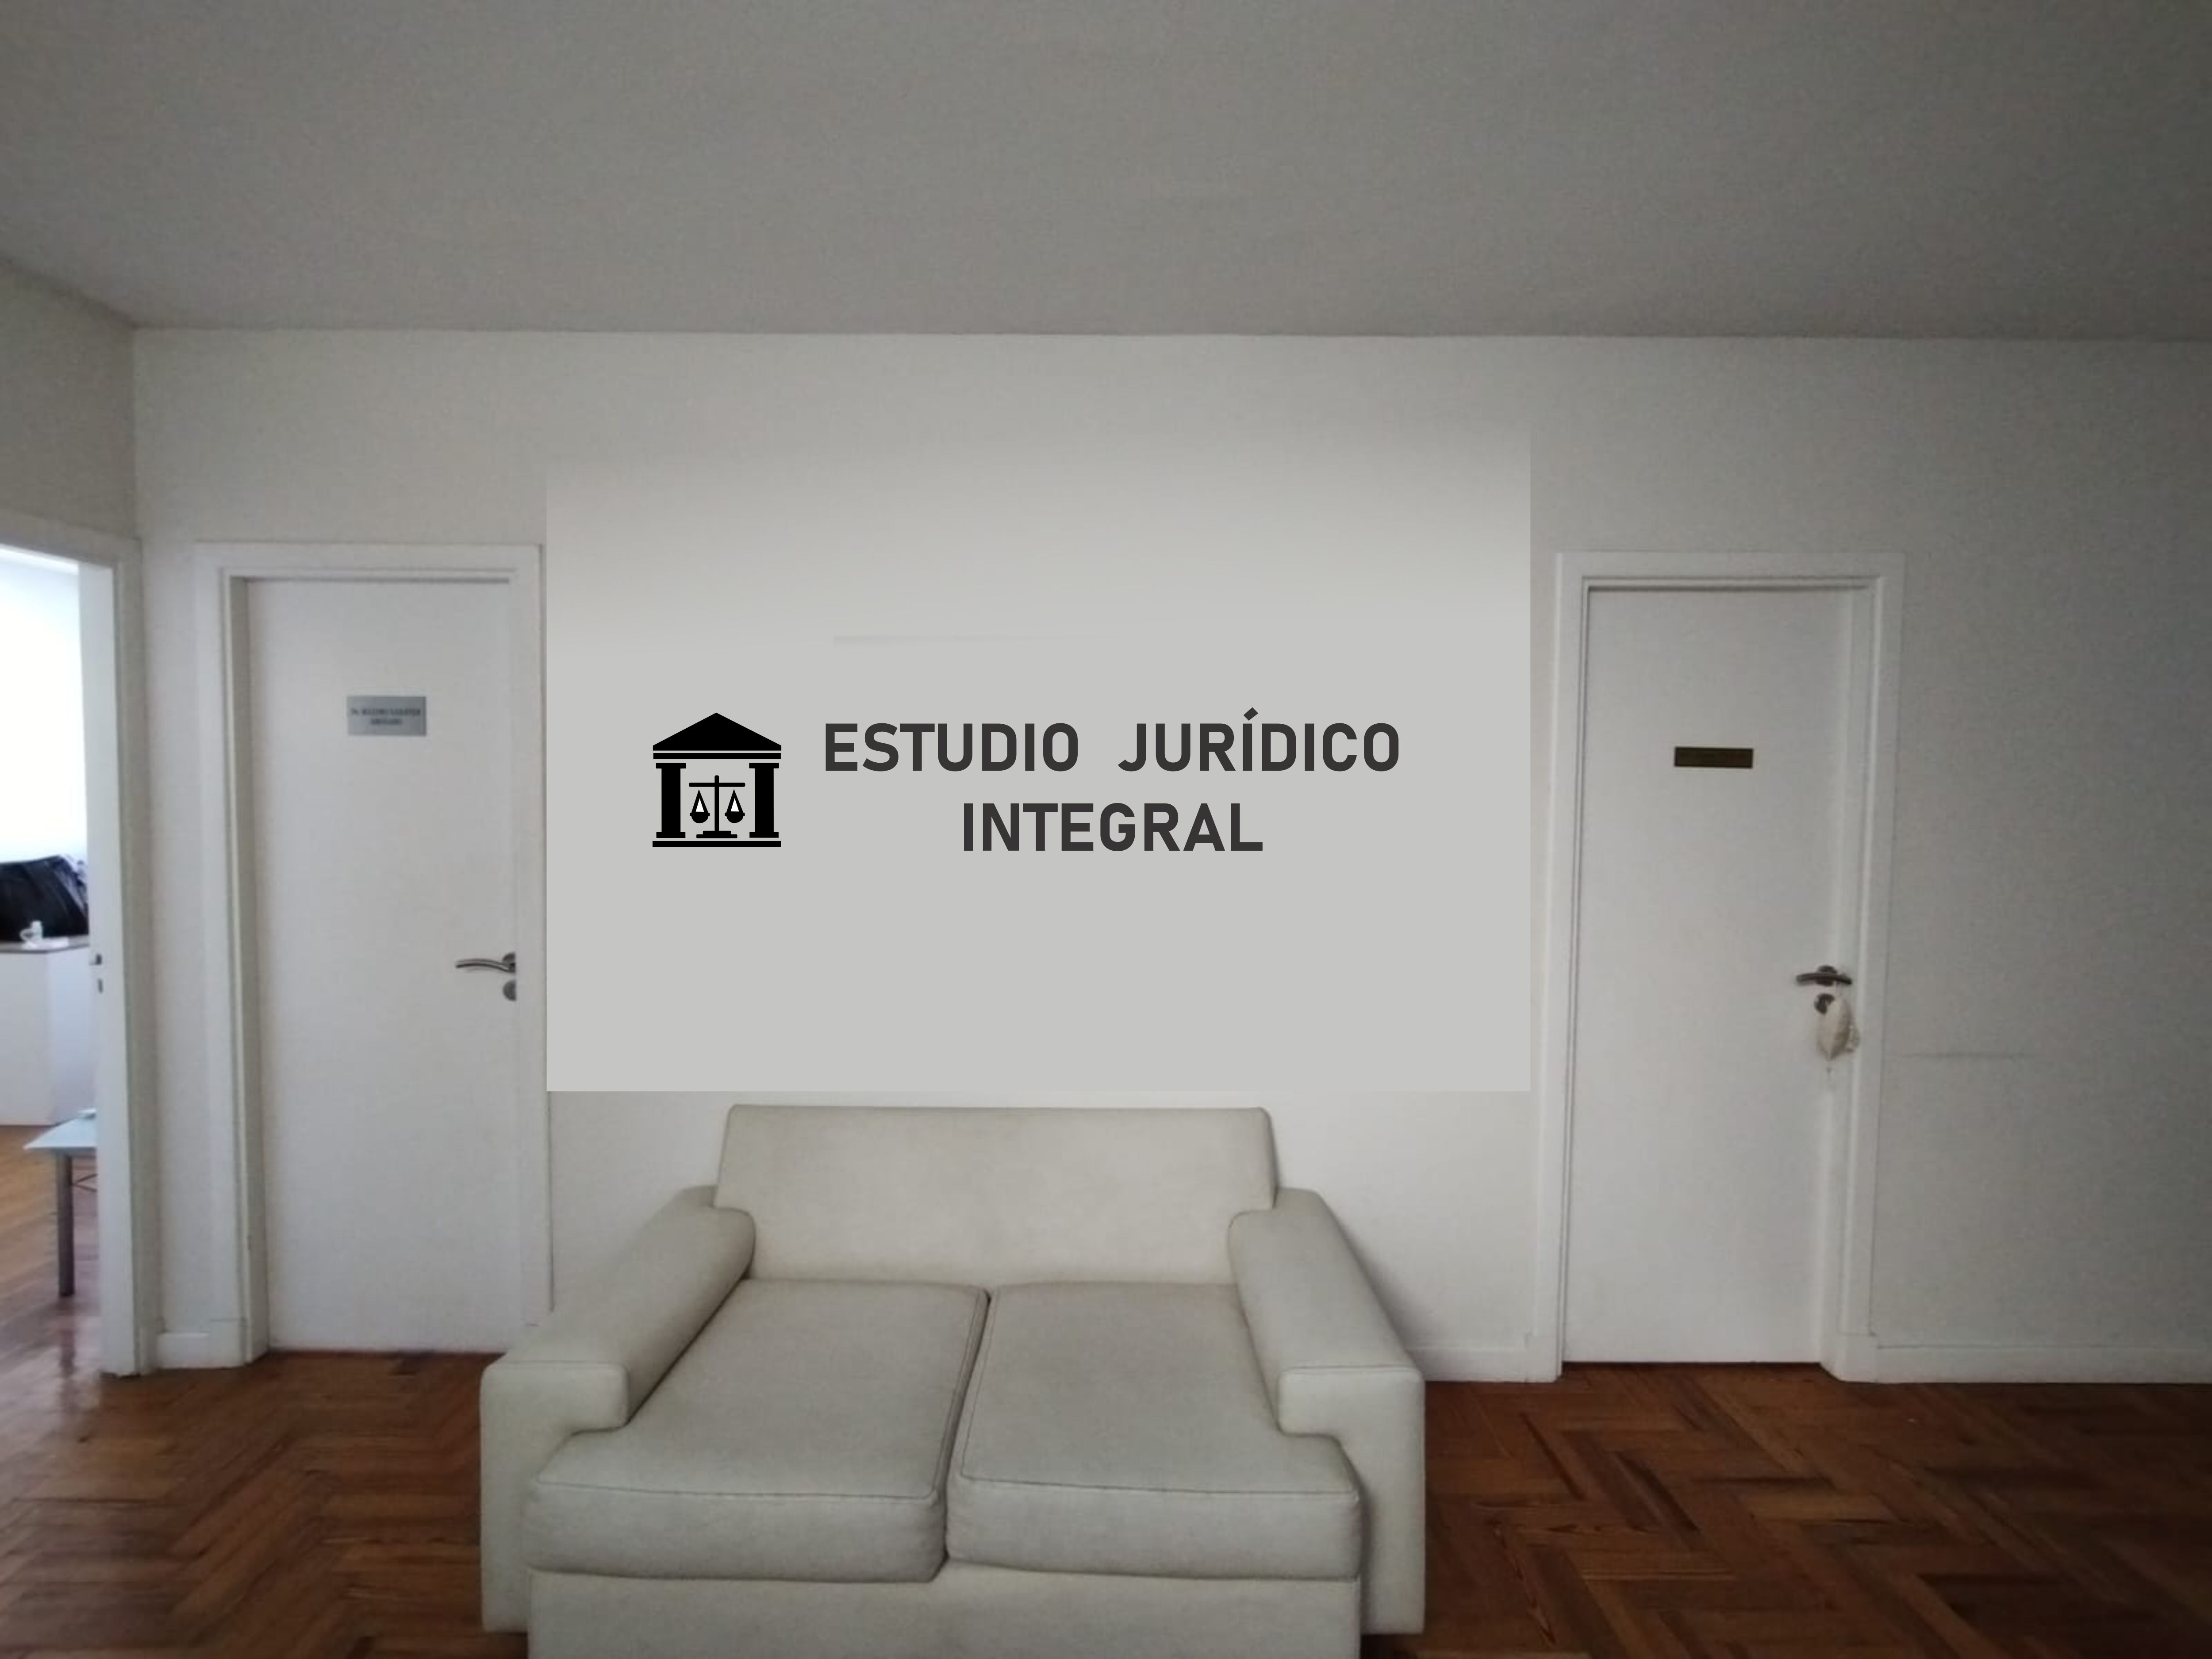 ESTUDIO JURIDICO
INTEGRAL